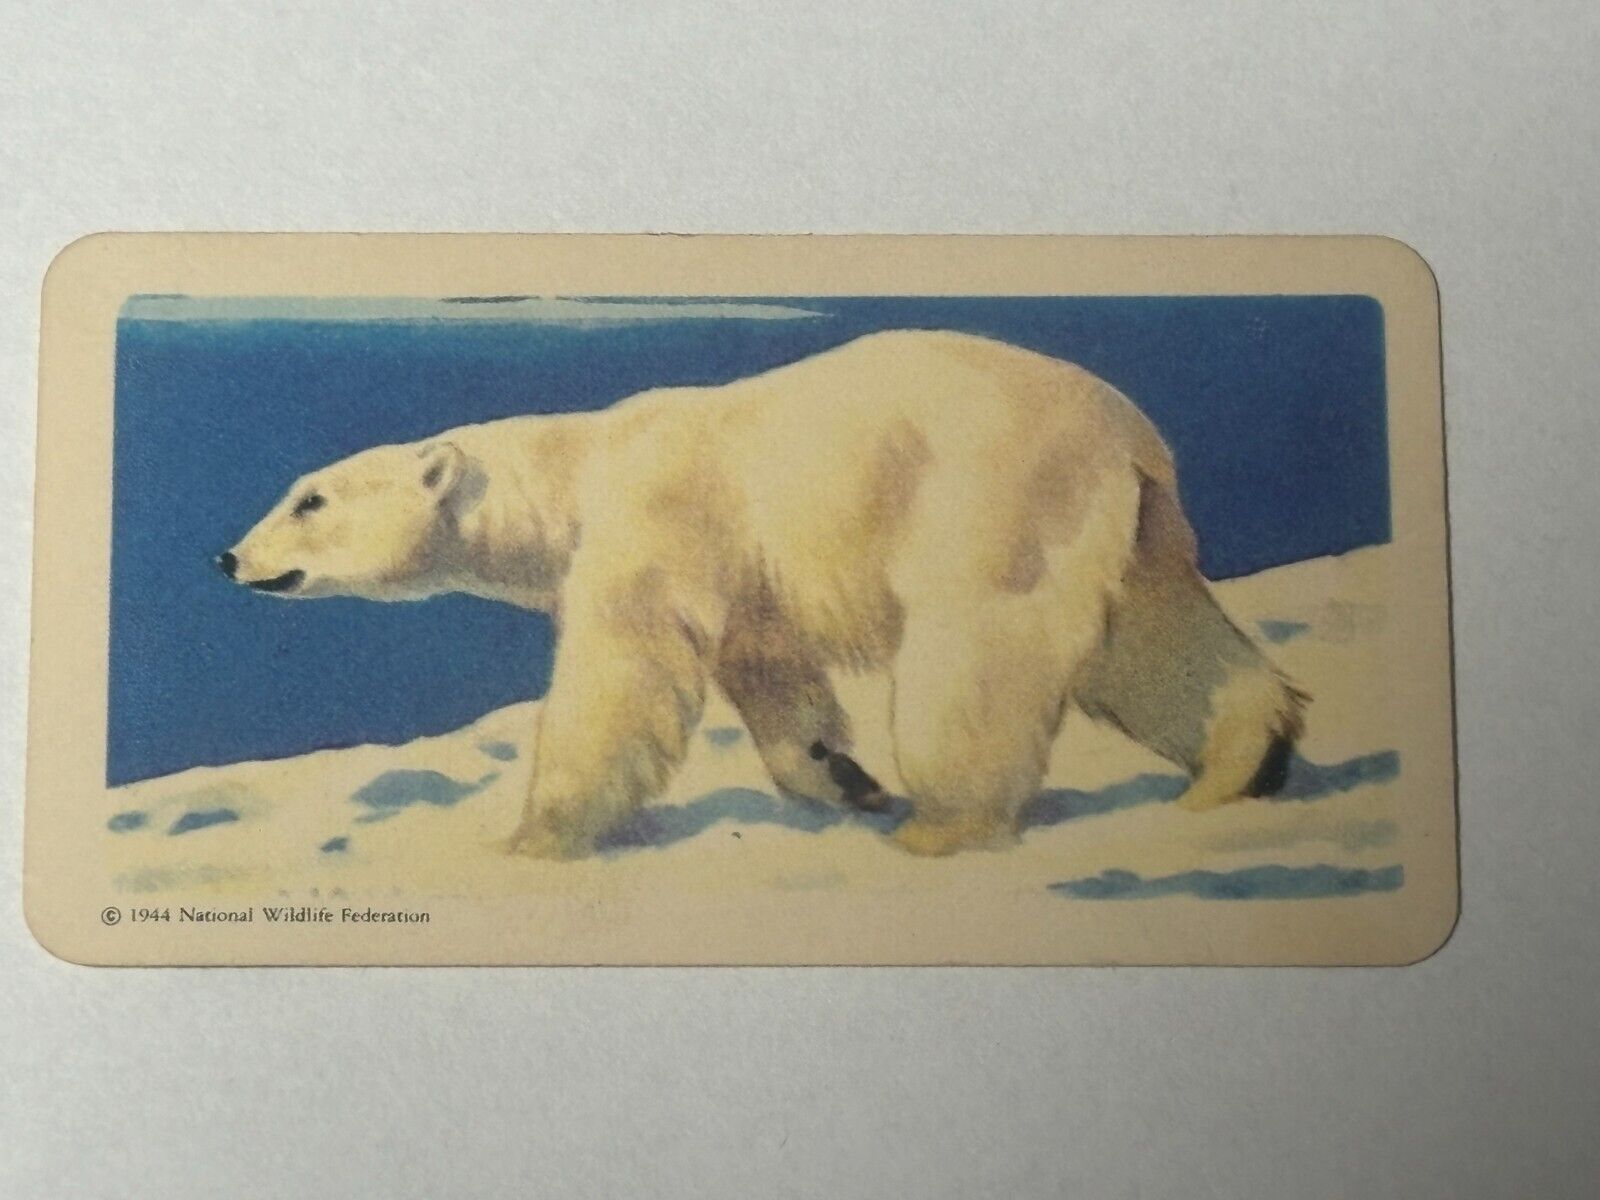 1962 Brooke Bond Canada Animals of North America Series 2 lot of 3 tea cards